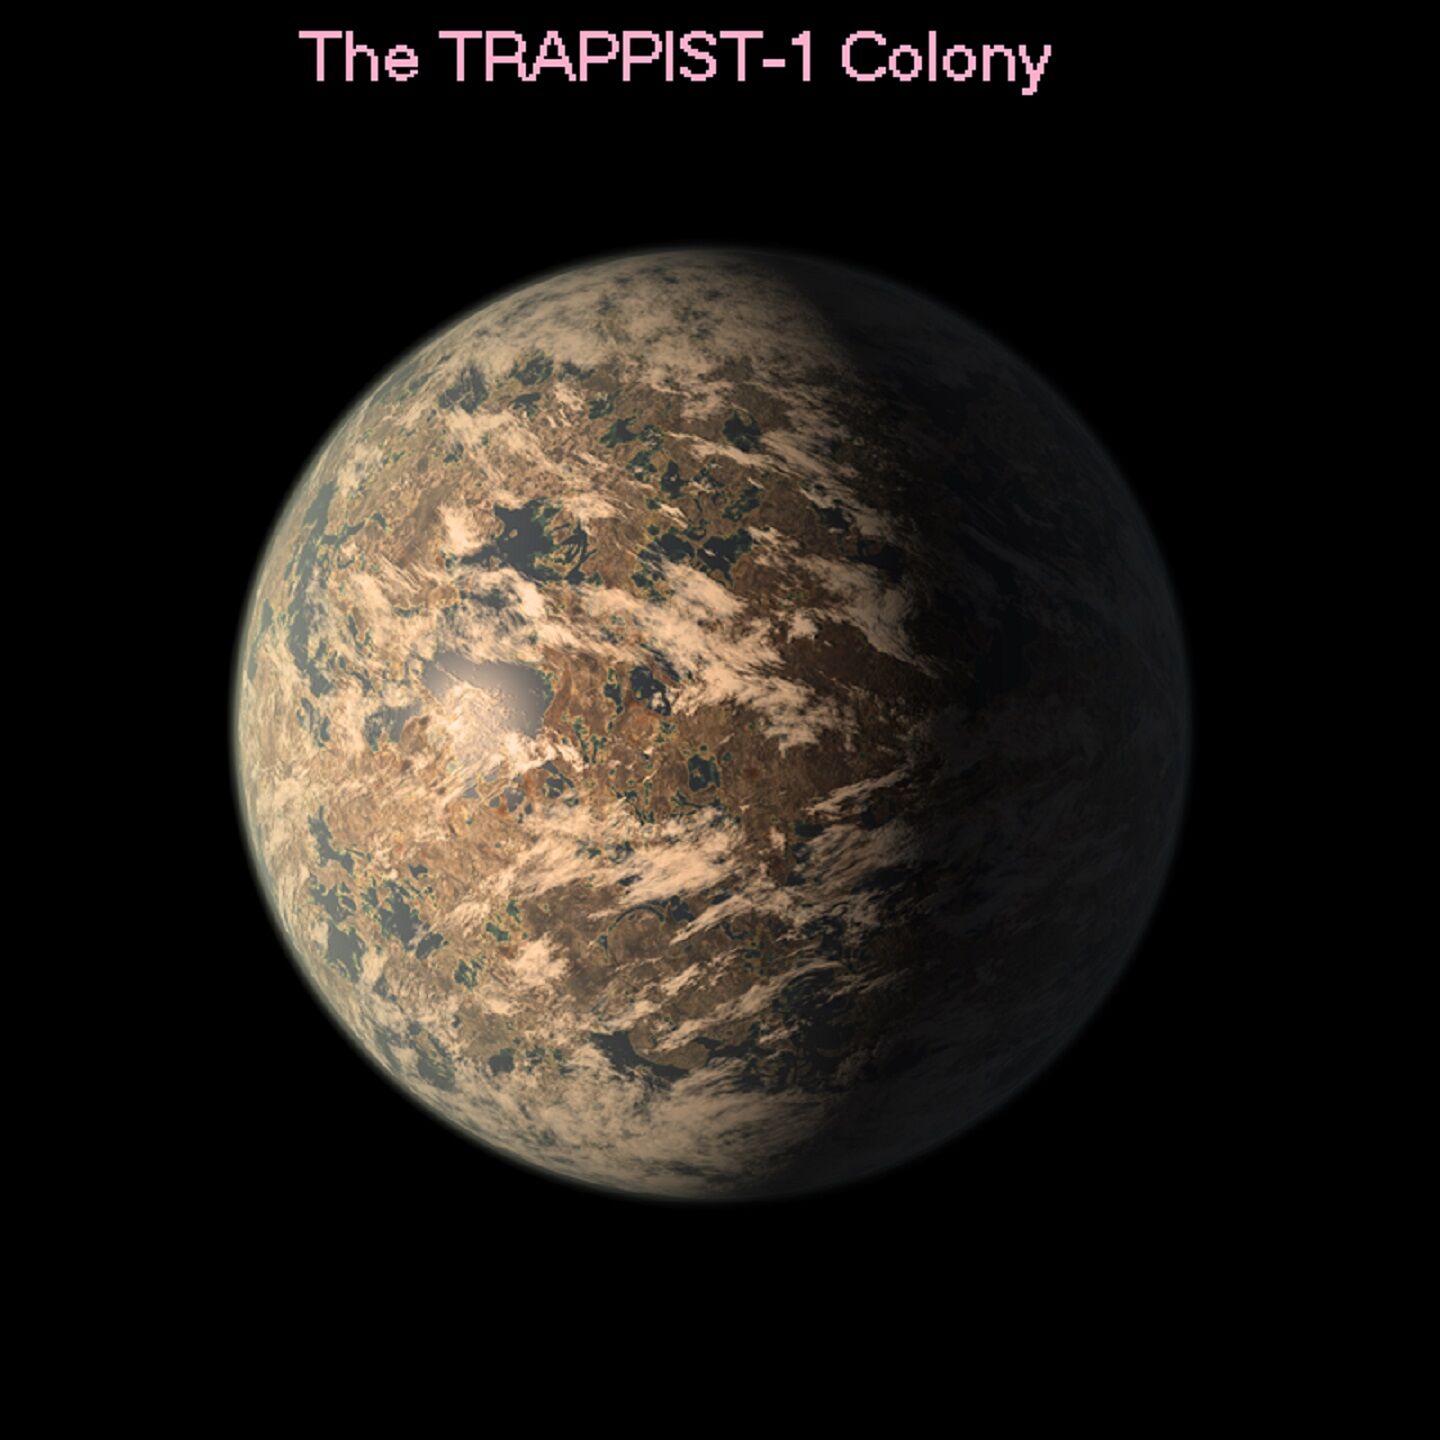 THE TRAPPIST-1 COLONY